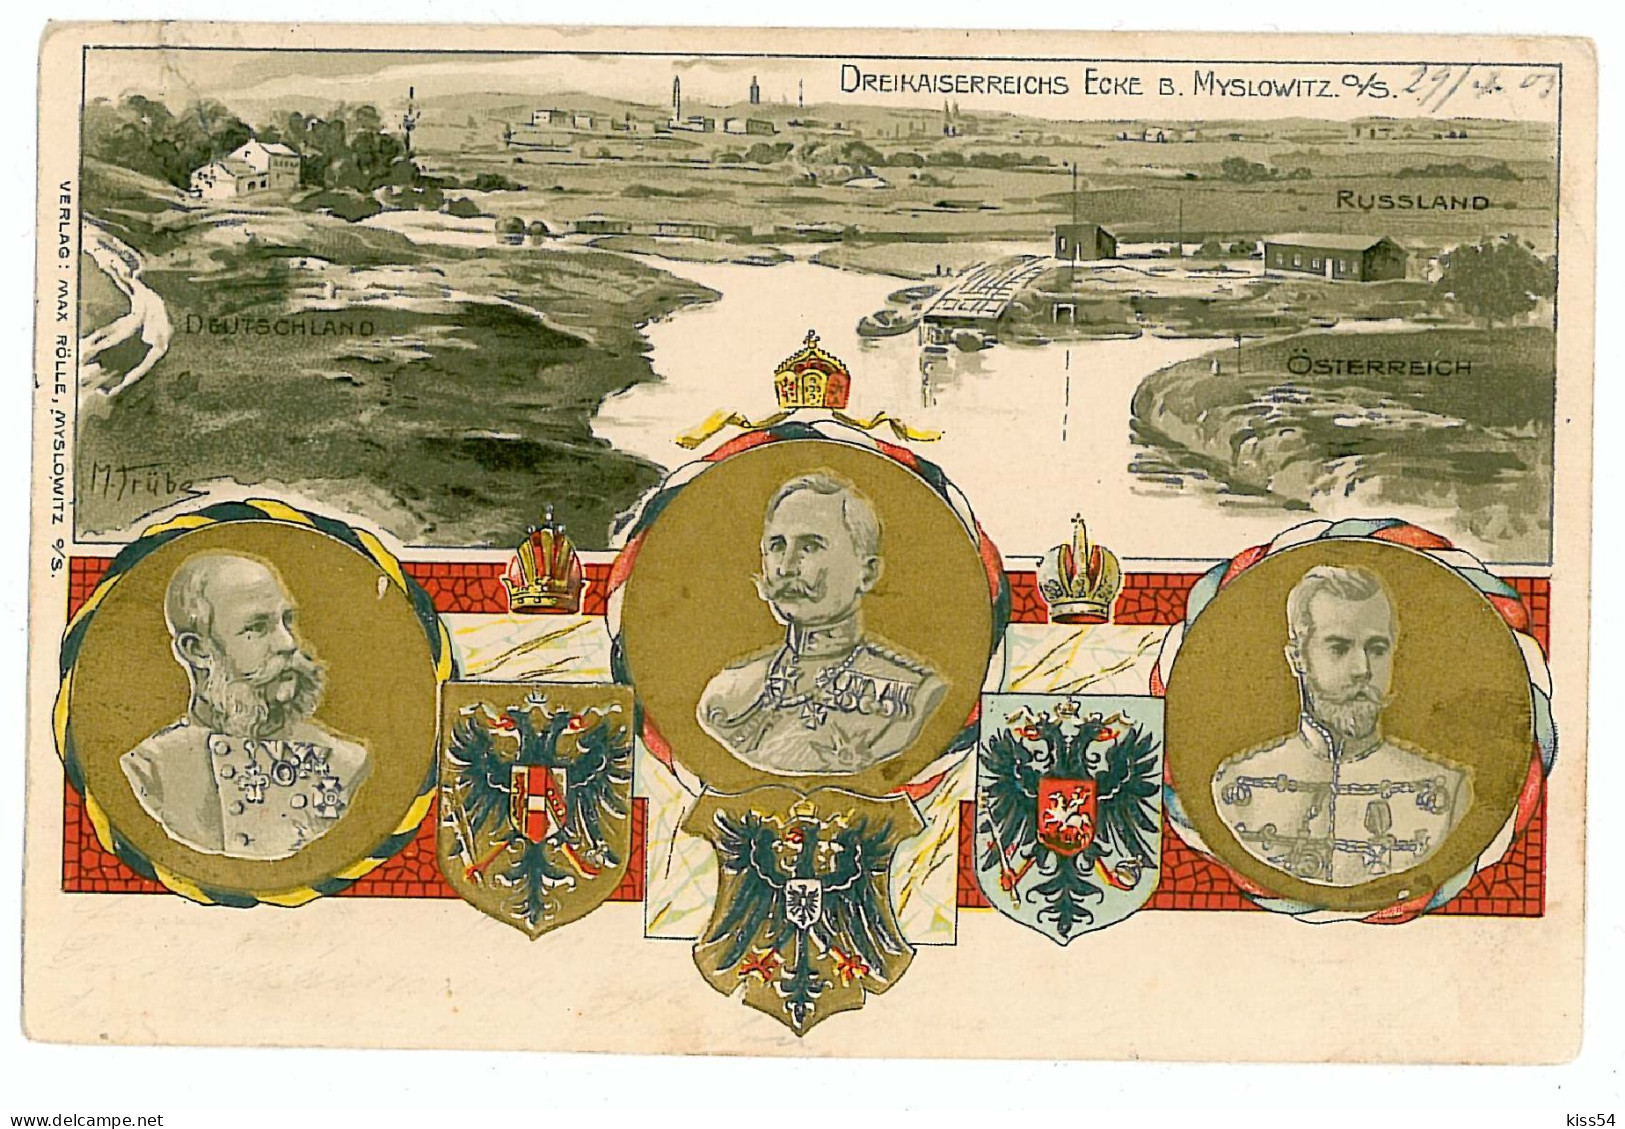 Poland, RUS 86 - 8119 MYSLOWITZ, Poland, Royalty, Germany, Austria, Russia, Litho - Old Postcard, Embossed - Used - 1903 - Poland